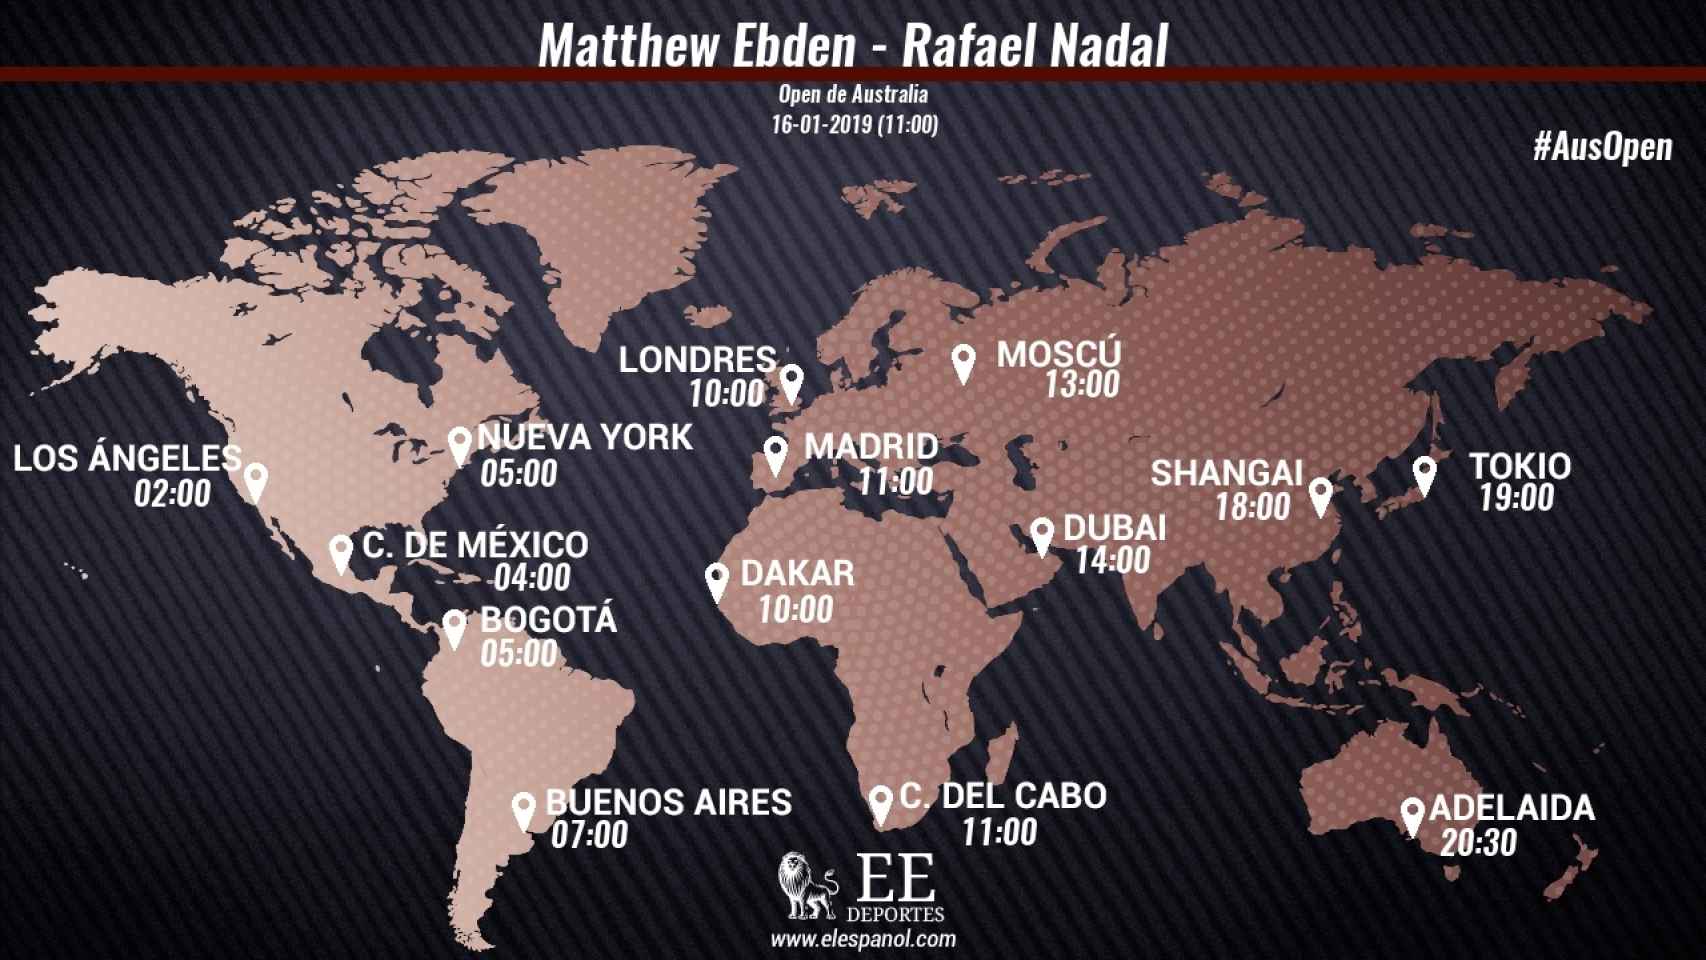 Horario del Matthew Ebden - Rafael Nadal